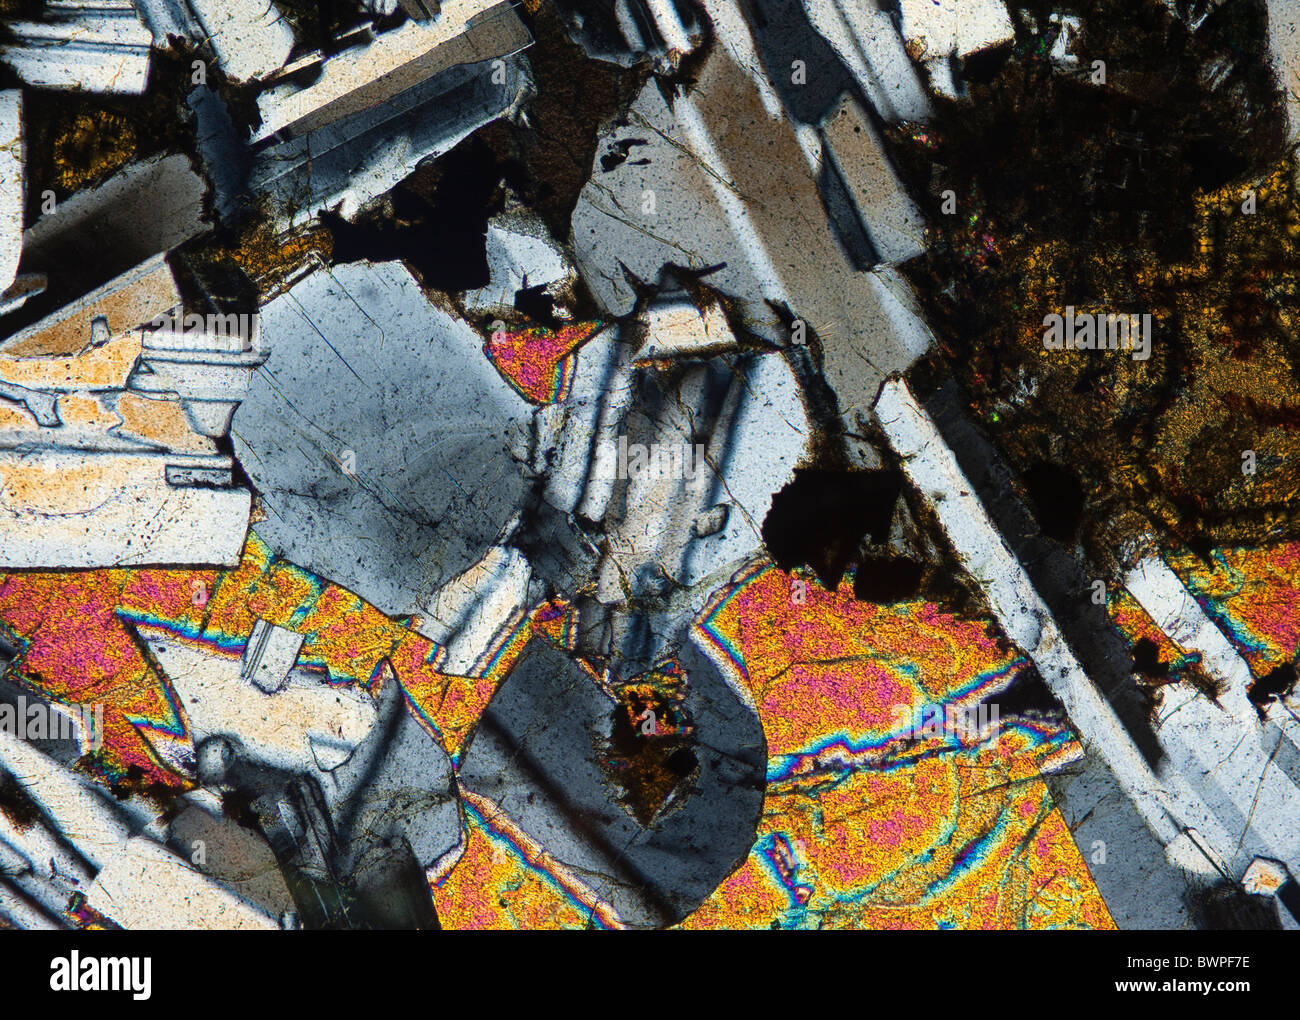 Vent Dolerite, Cross Polarised Microscope Image Stock Photo